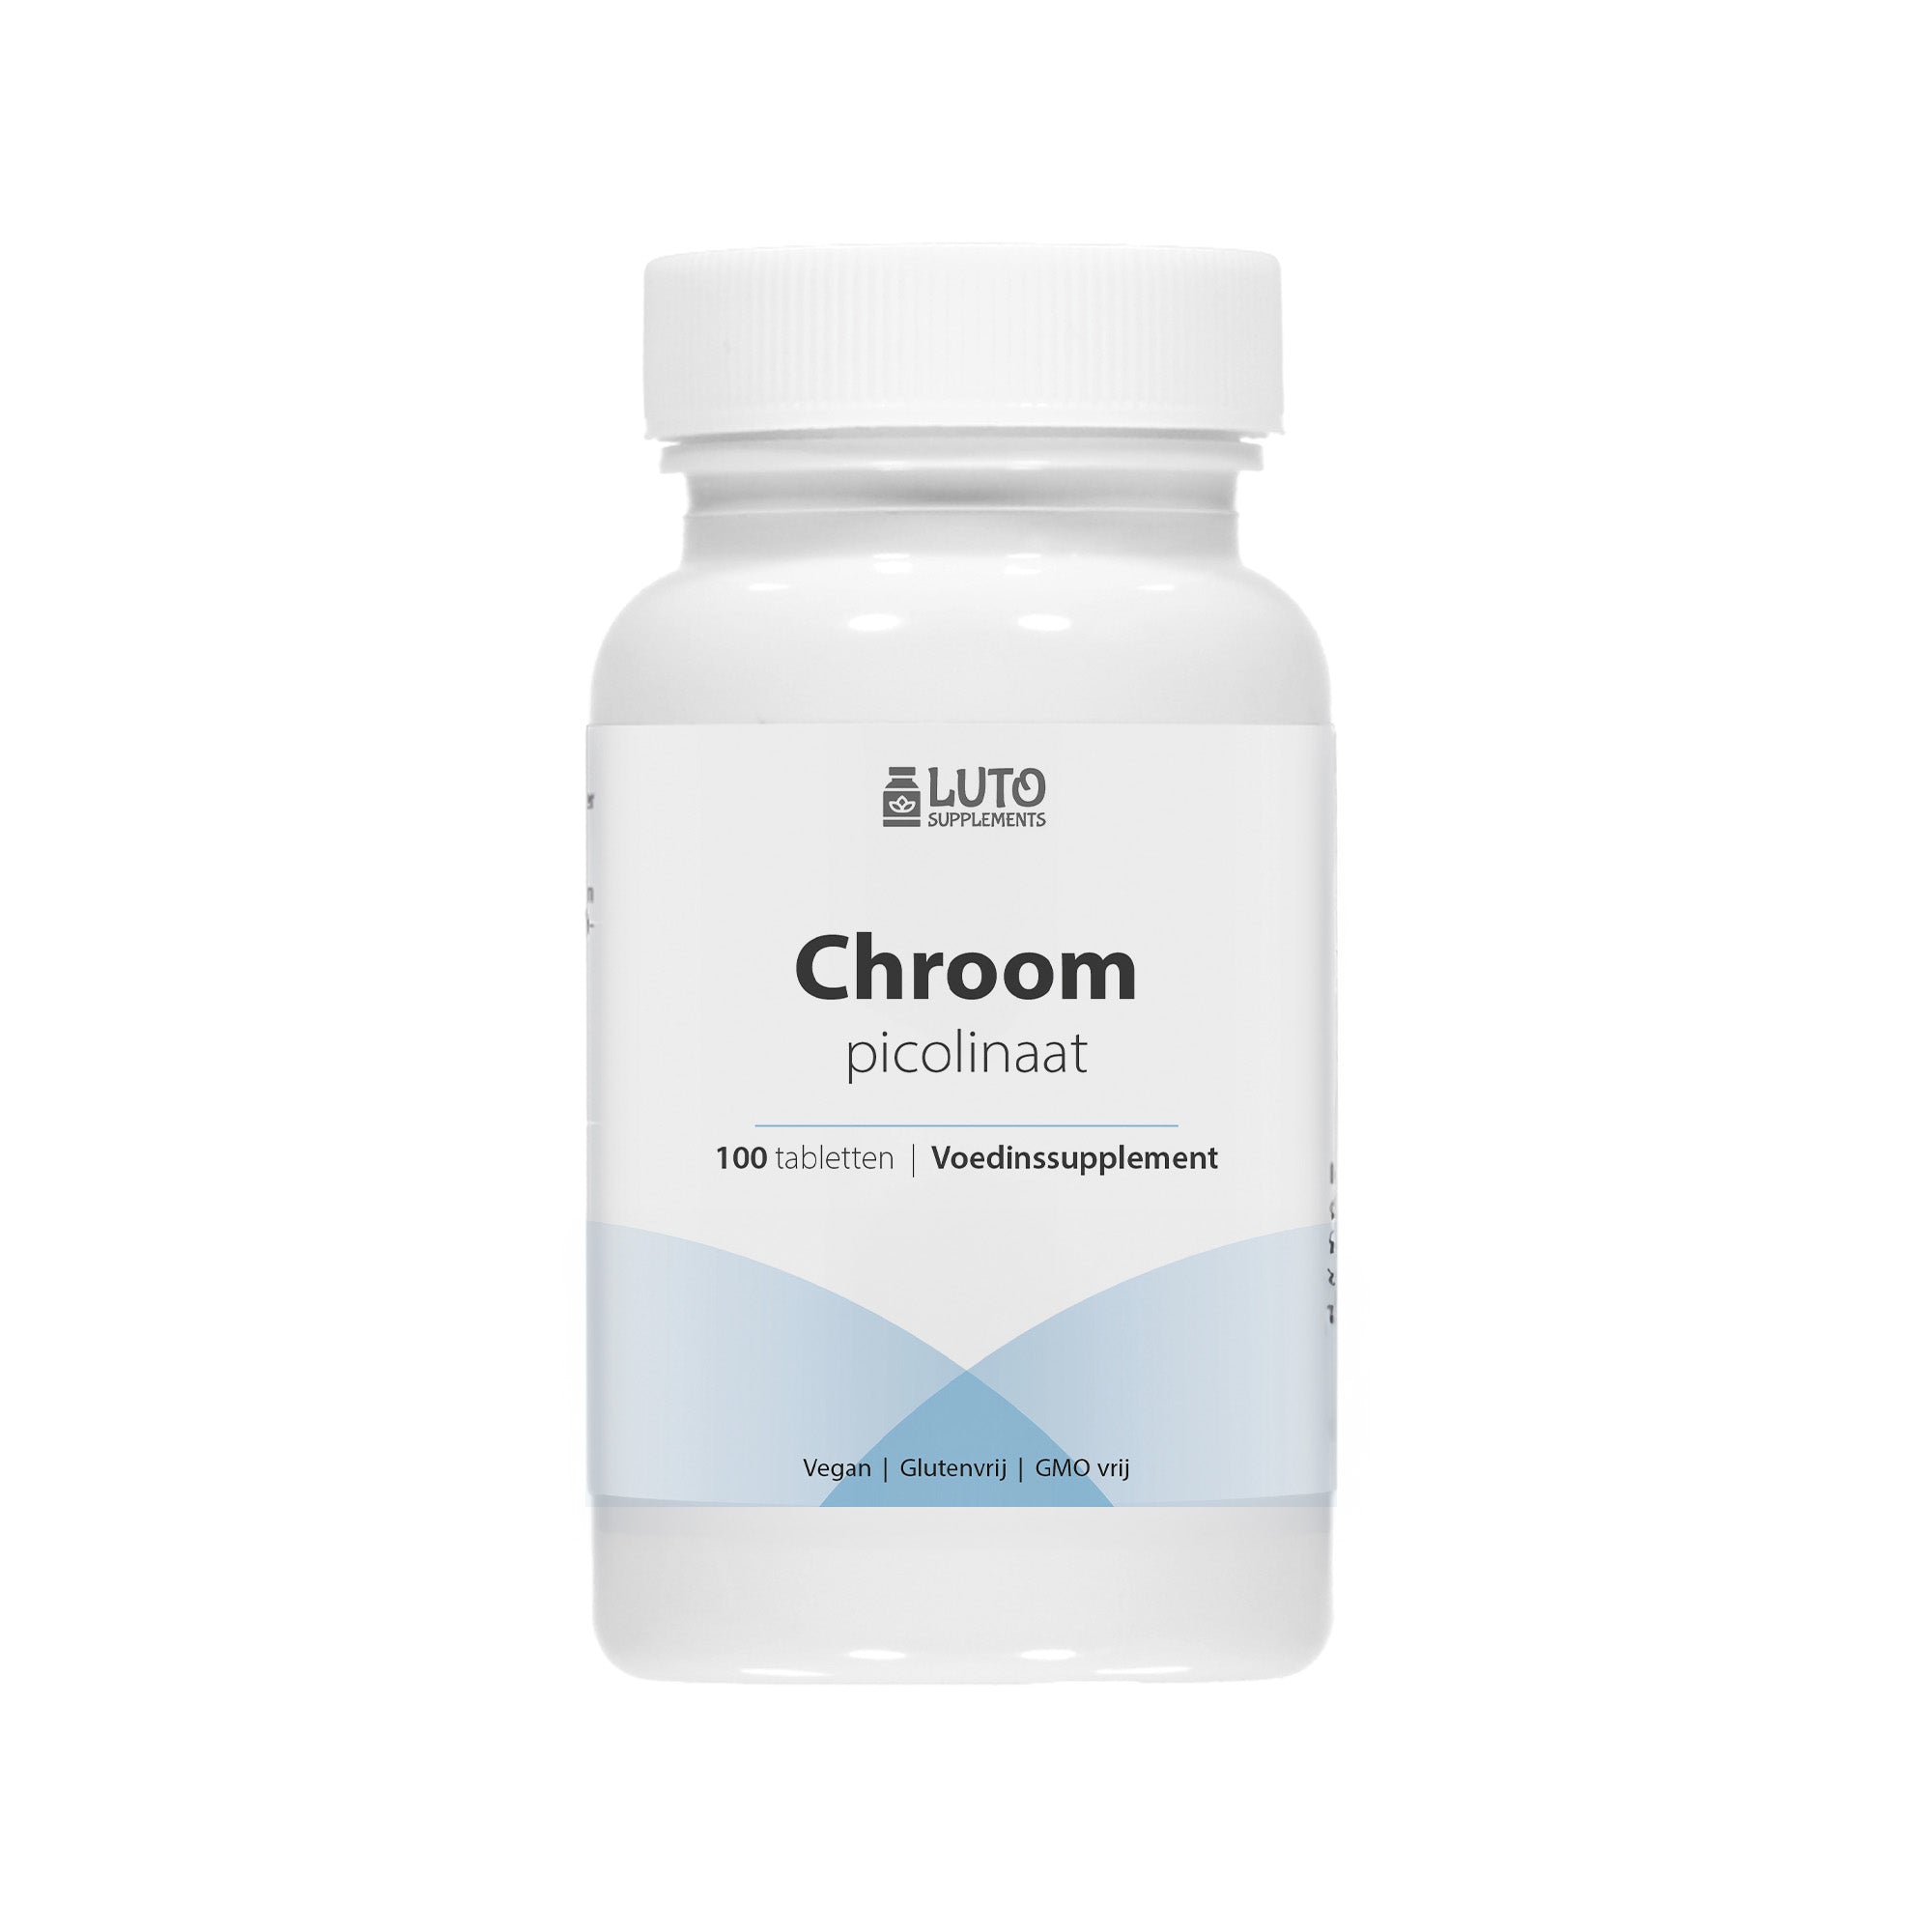 Chroom / Chromium Picolinaat | 200mg | 100 Tabletten | LUTO Supplements